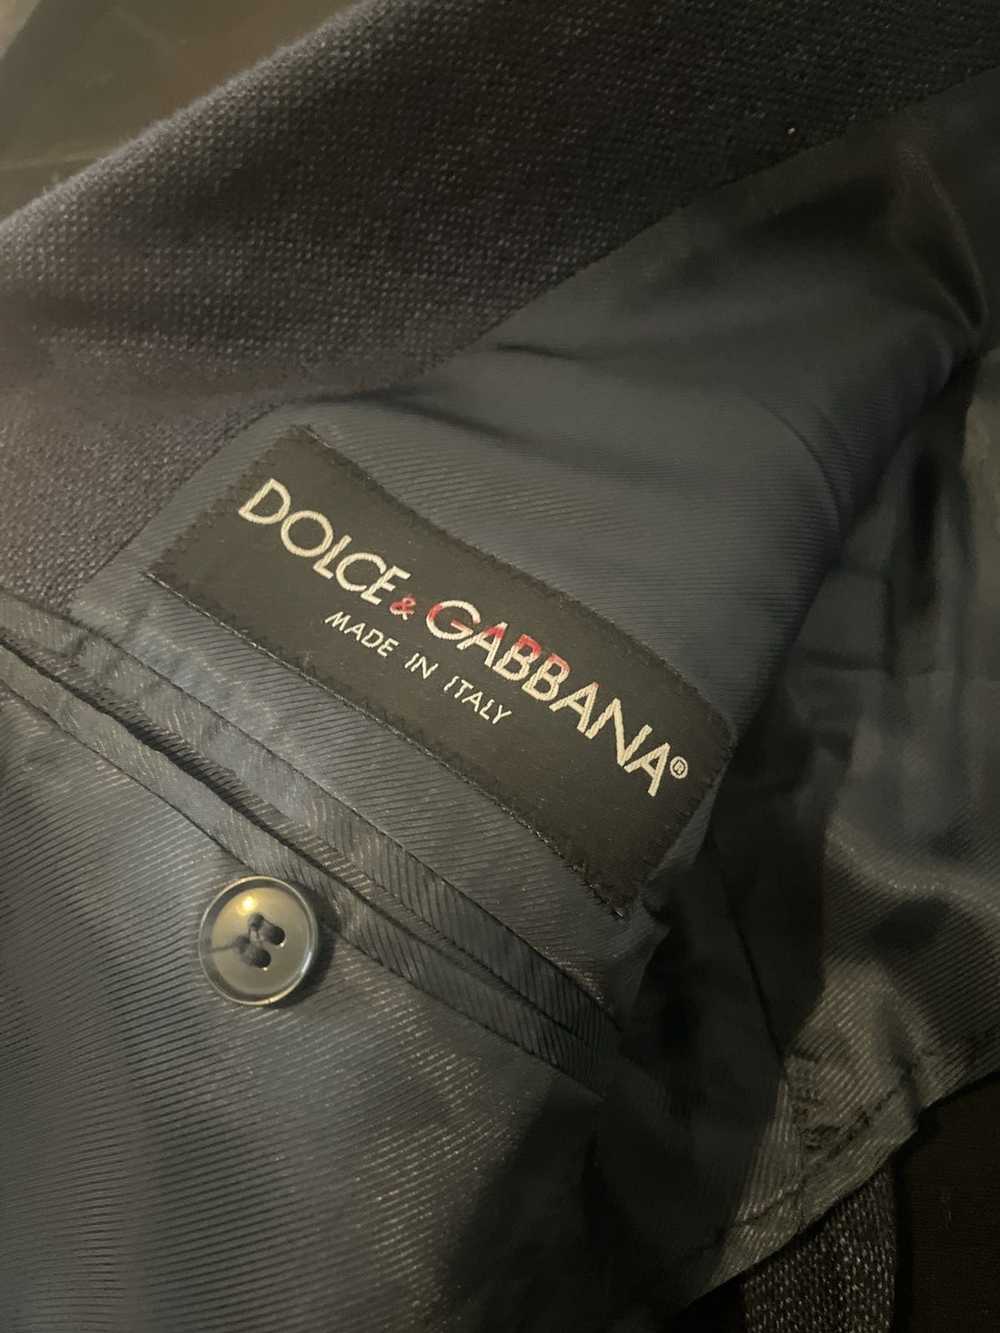 Dolce & Gabbana D & G Club Jacket - image 4